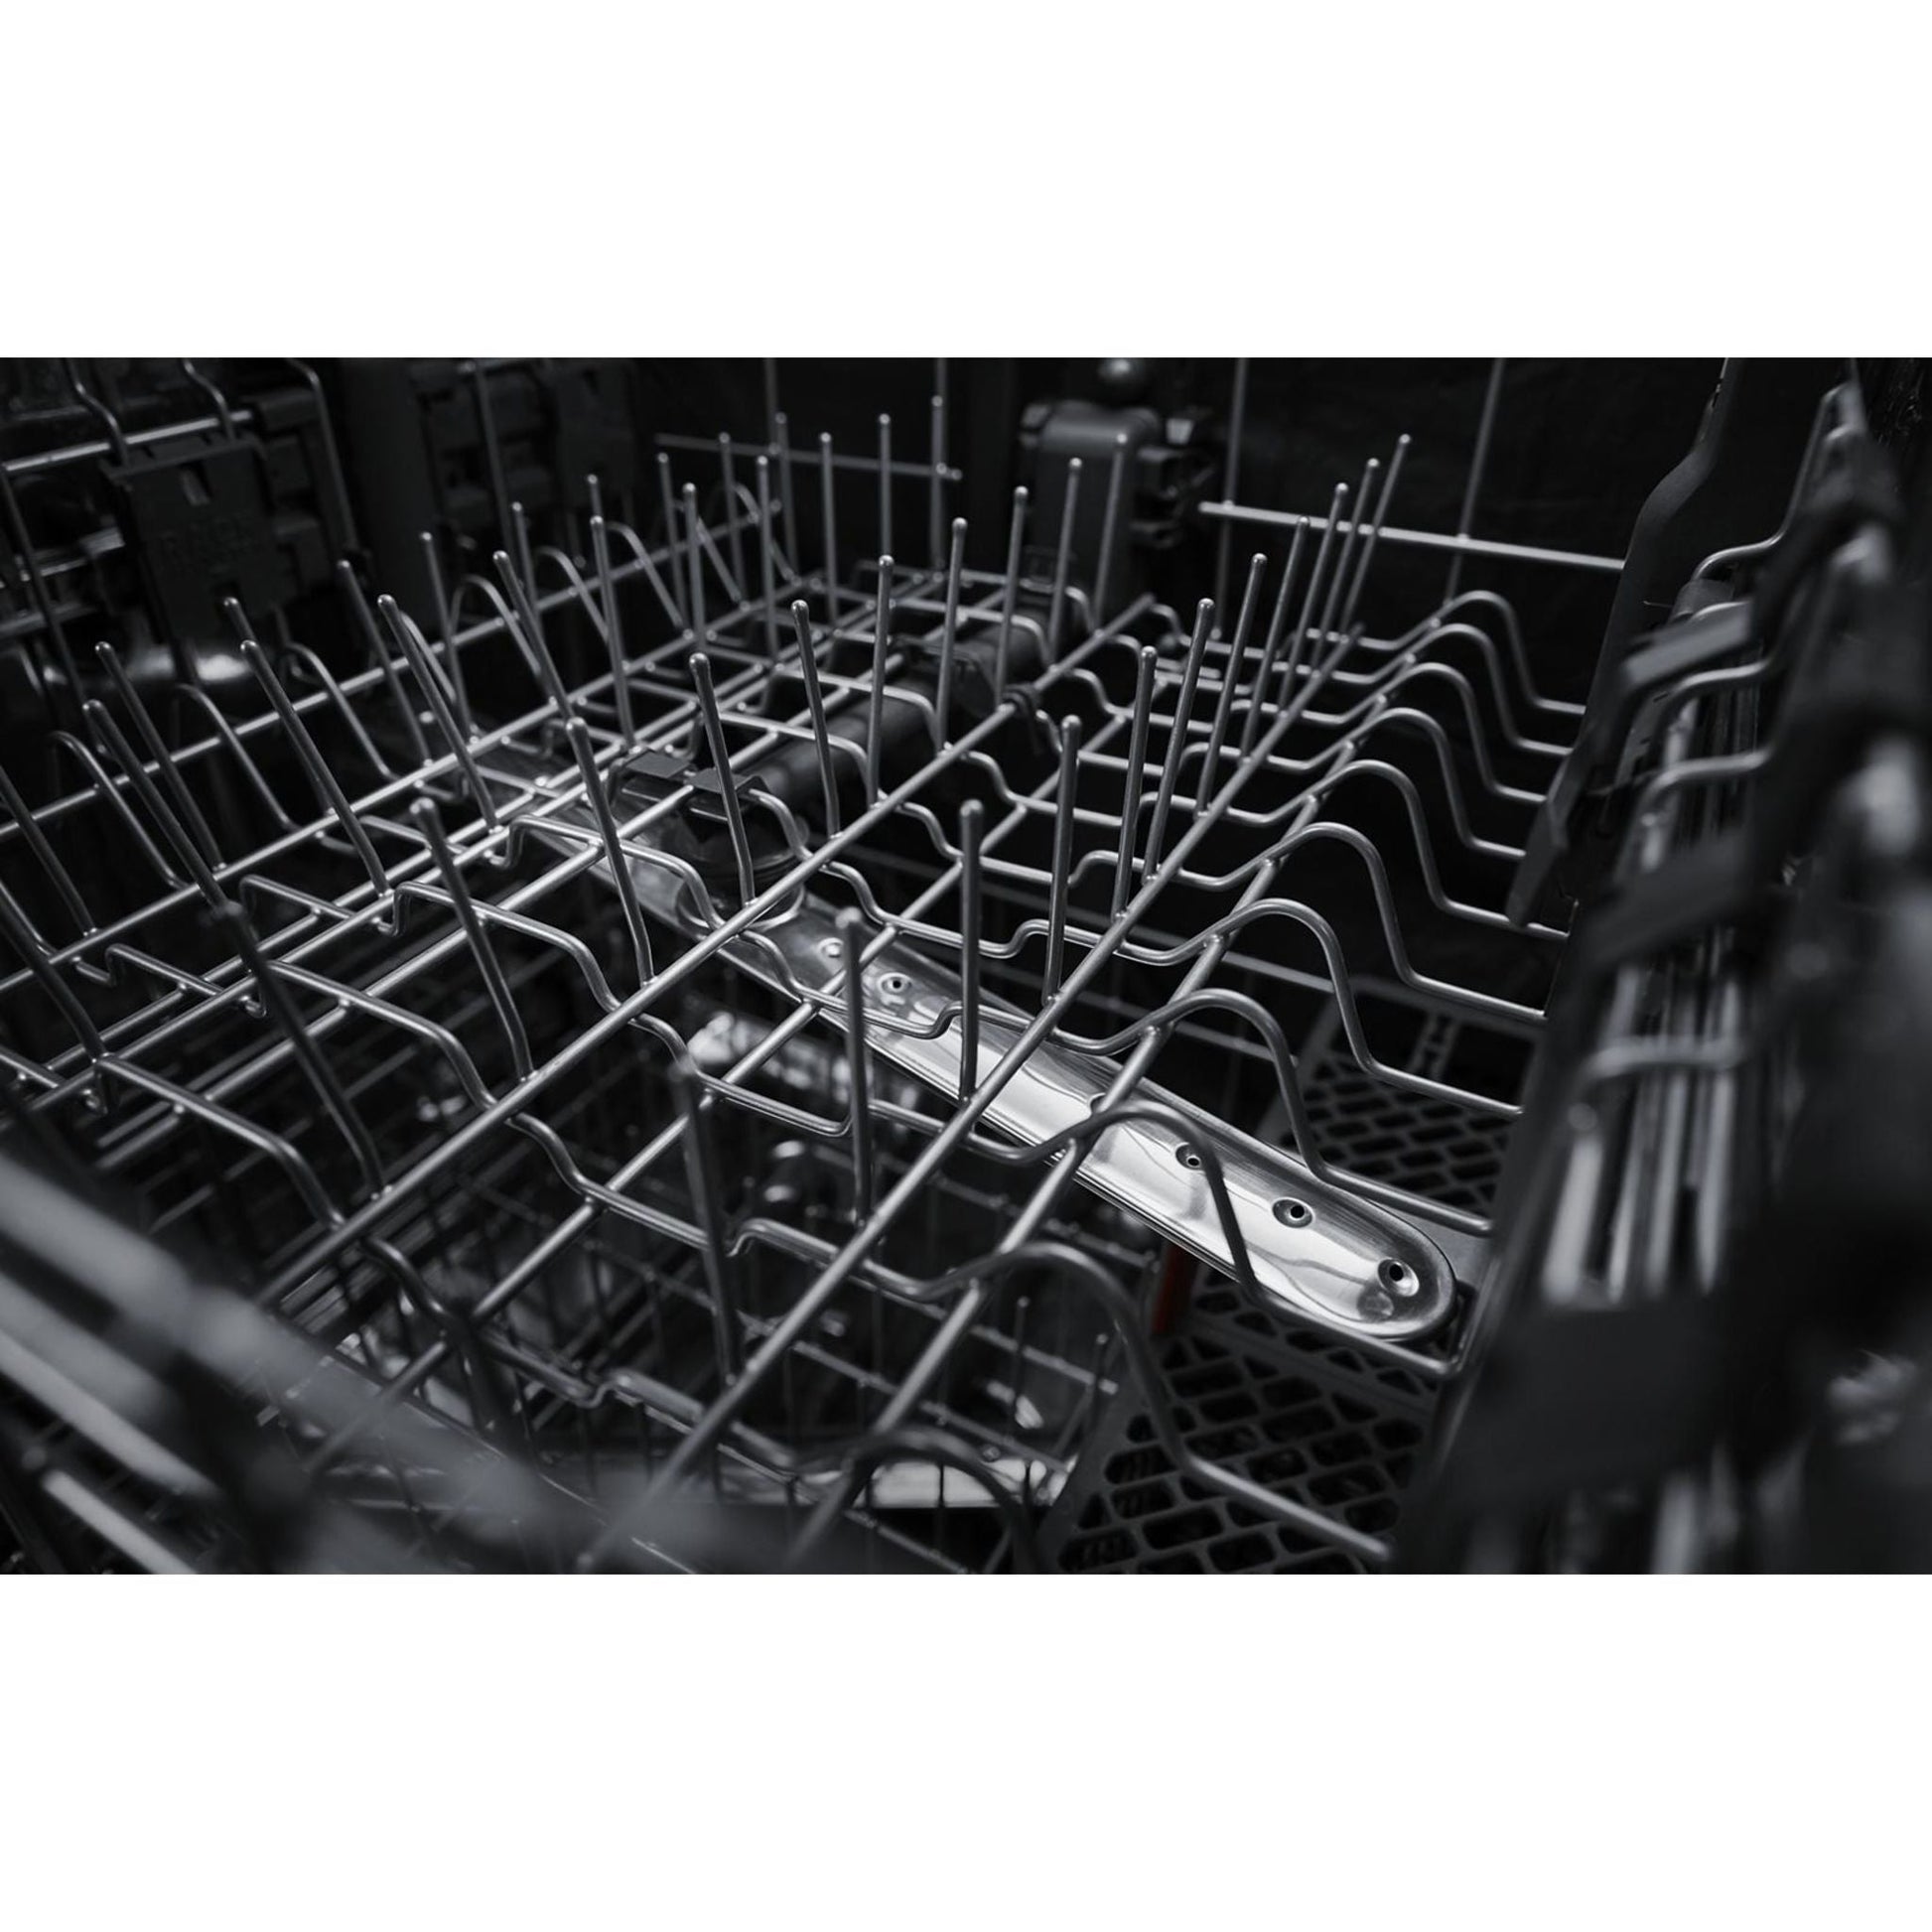 KitchenAid Dishwasher Stainless Steel Tub (KDPM604KBS) - Black Stainless